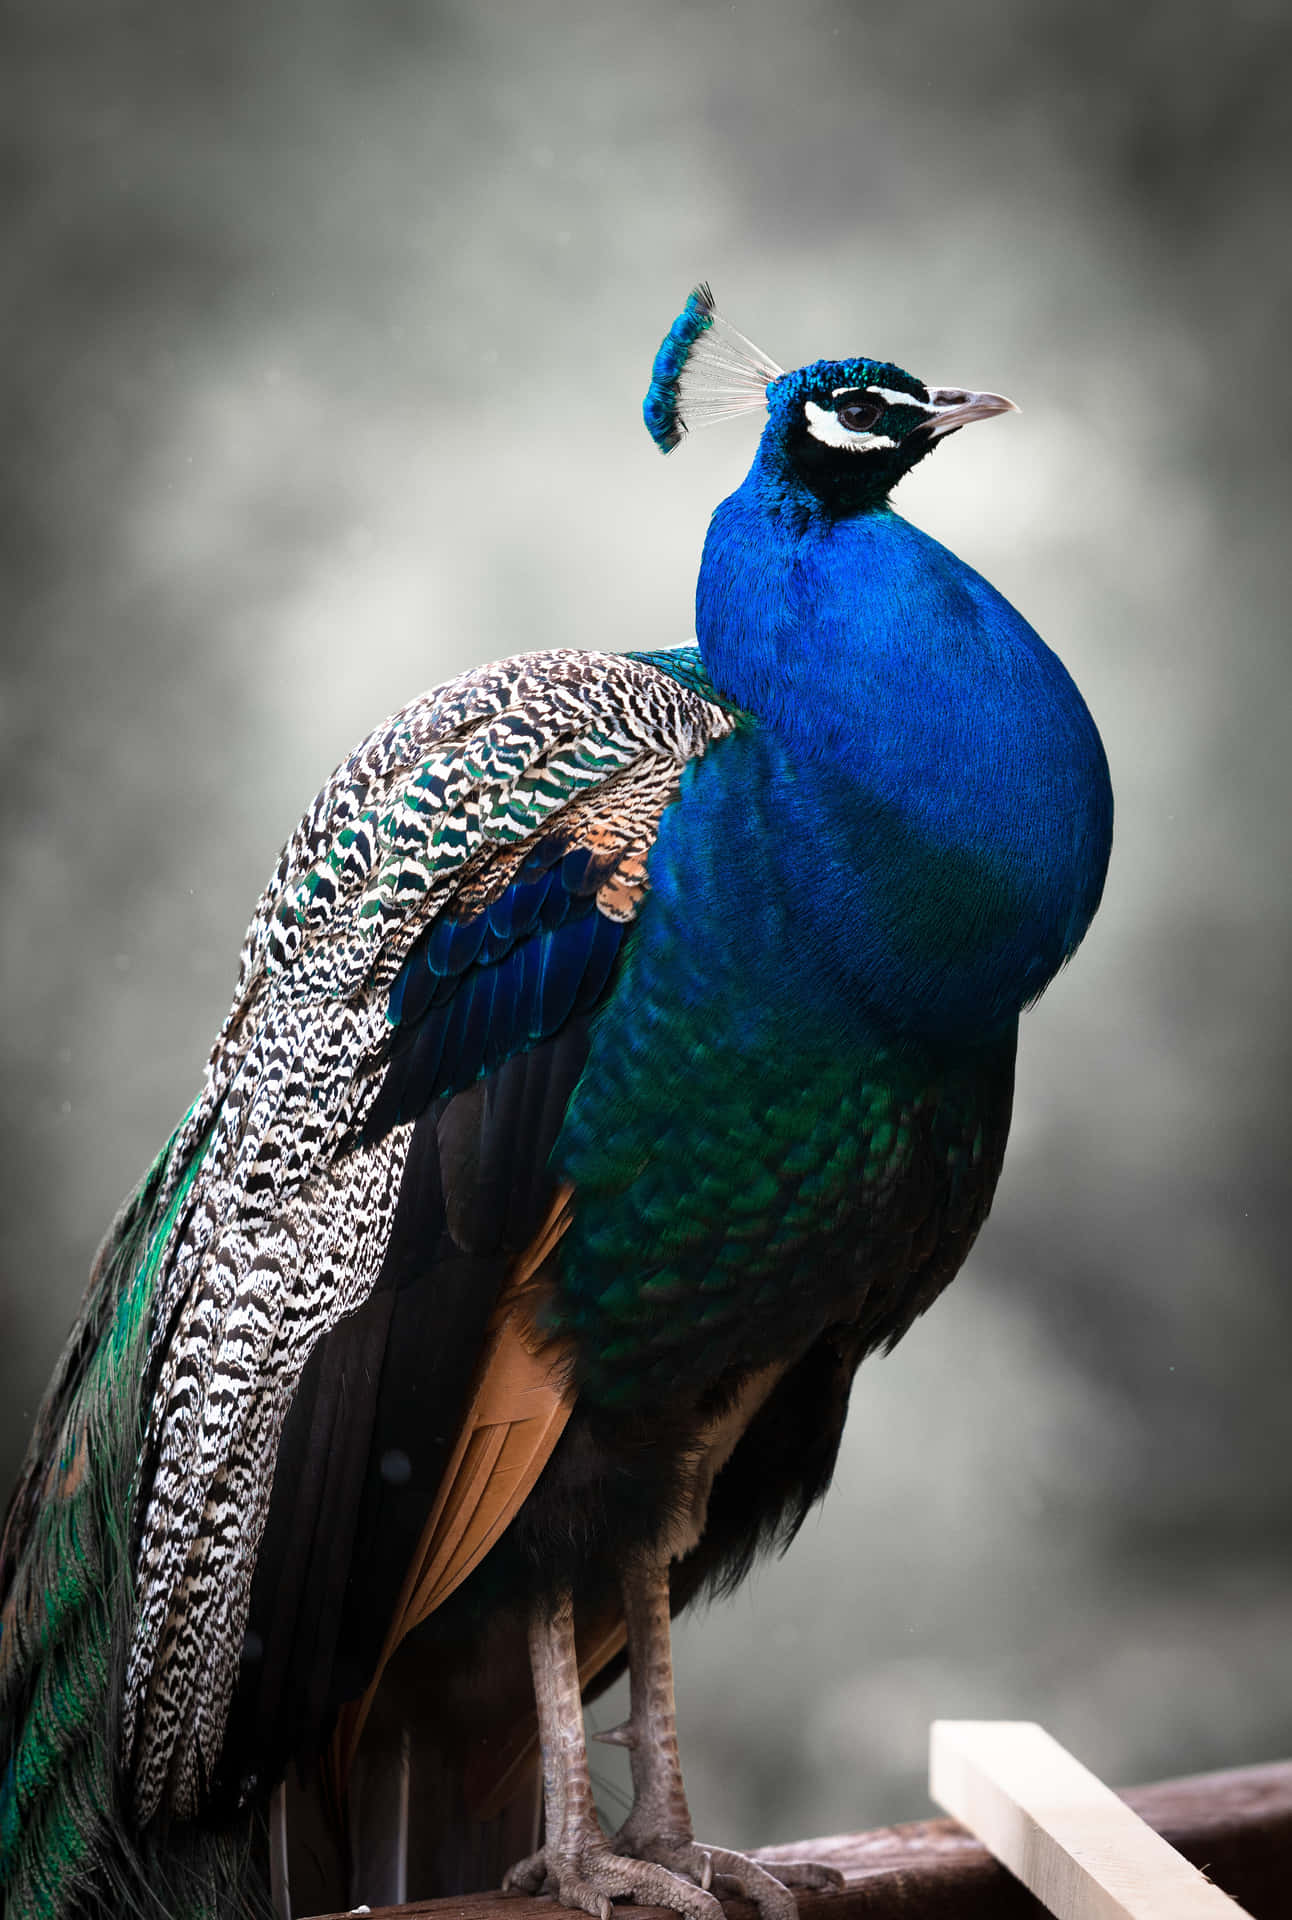 Majestic Peacock Portrait Wallpaper